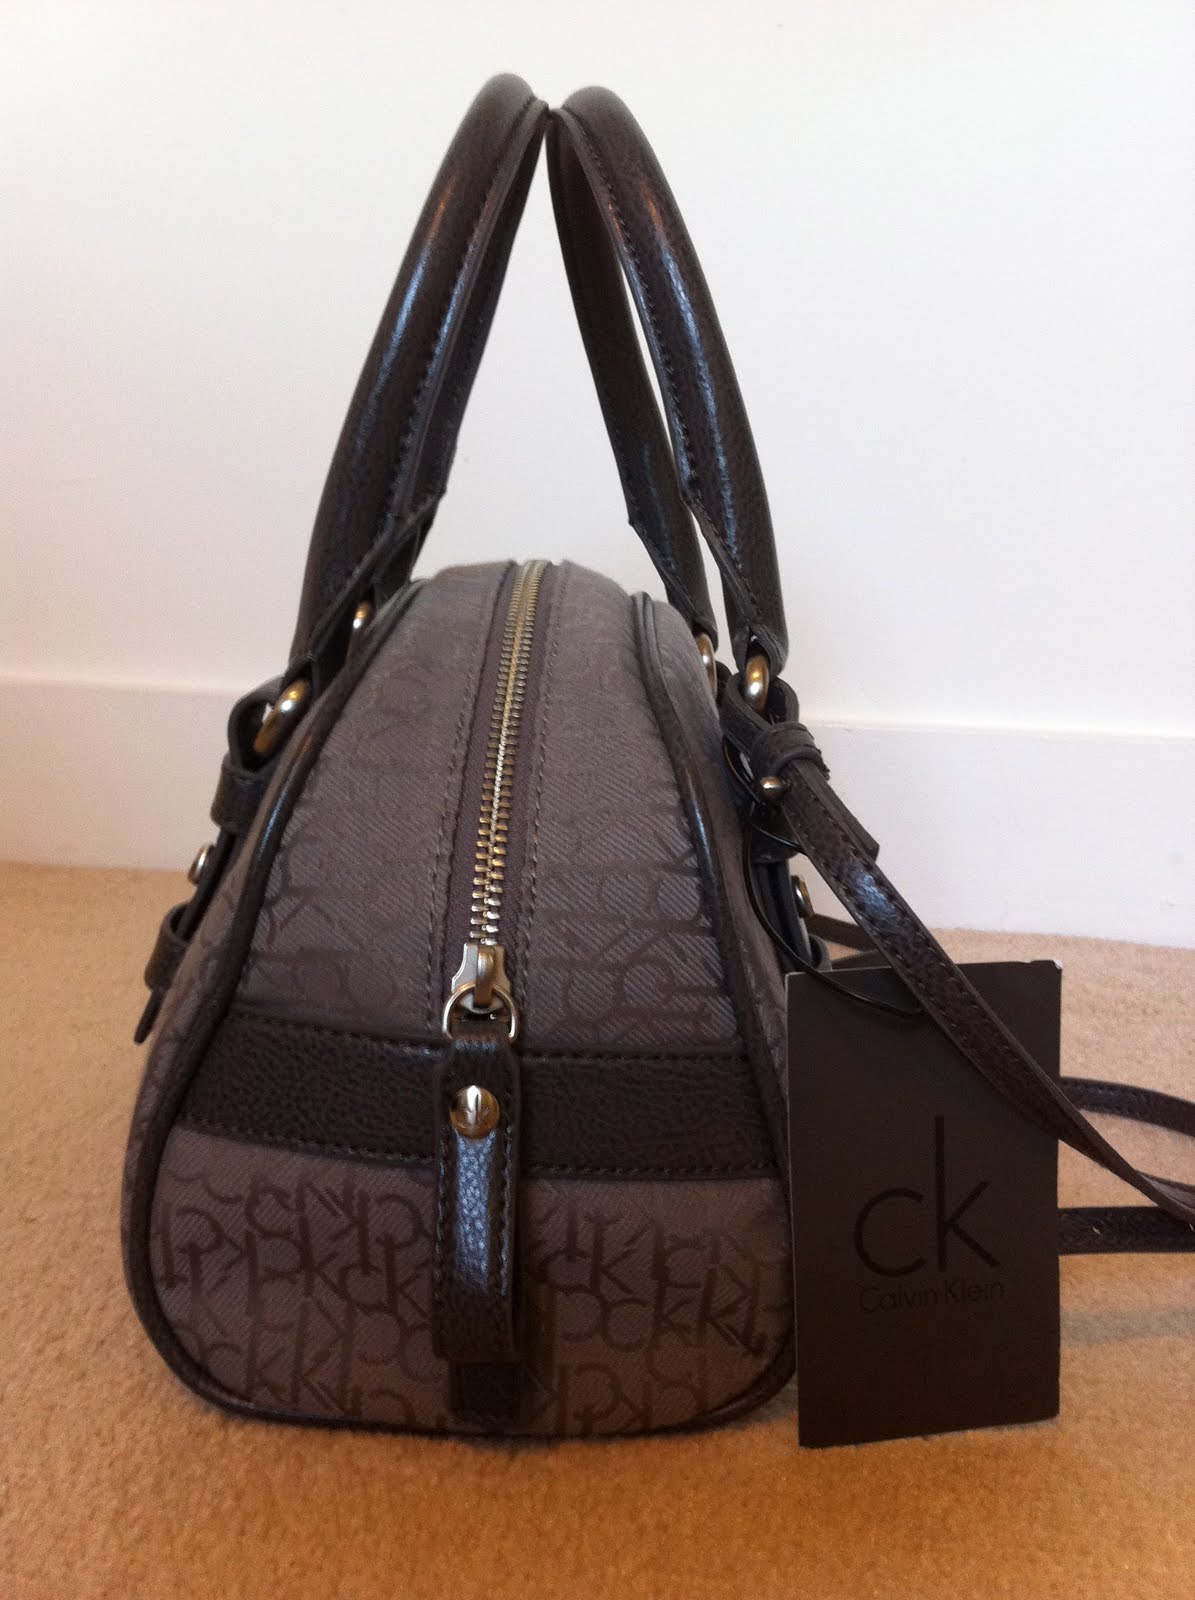 Discounted Genuine Handbags: (SOLD) Authentic Calvin Klein Mini Handbag For Sale